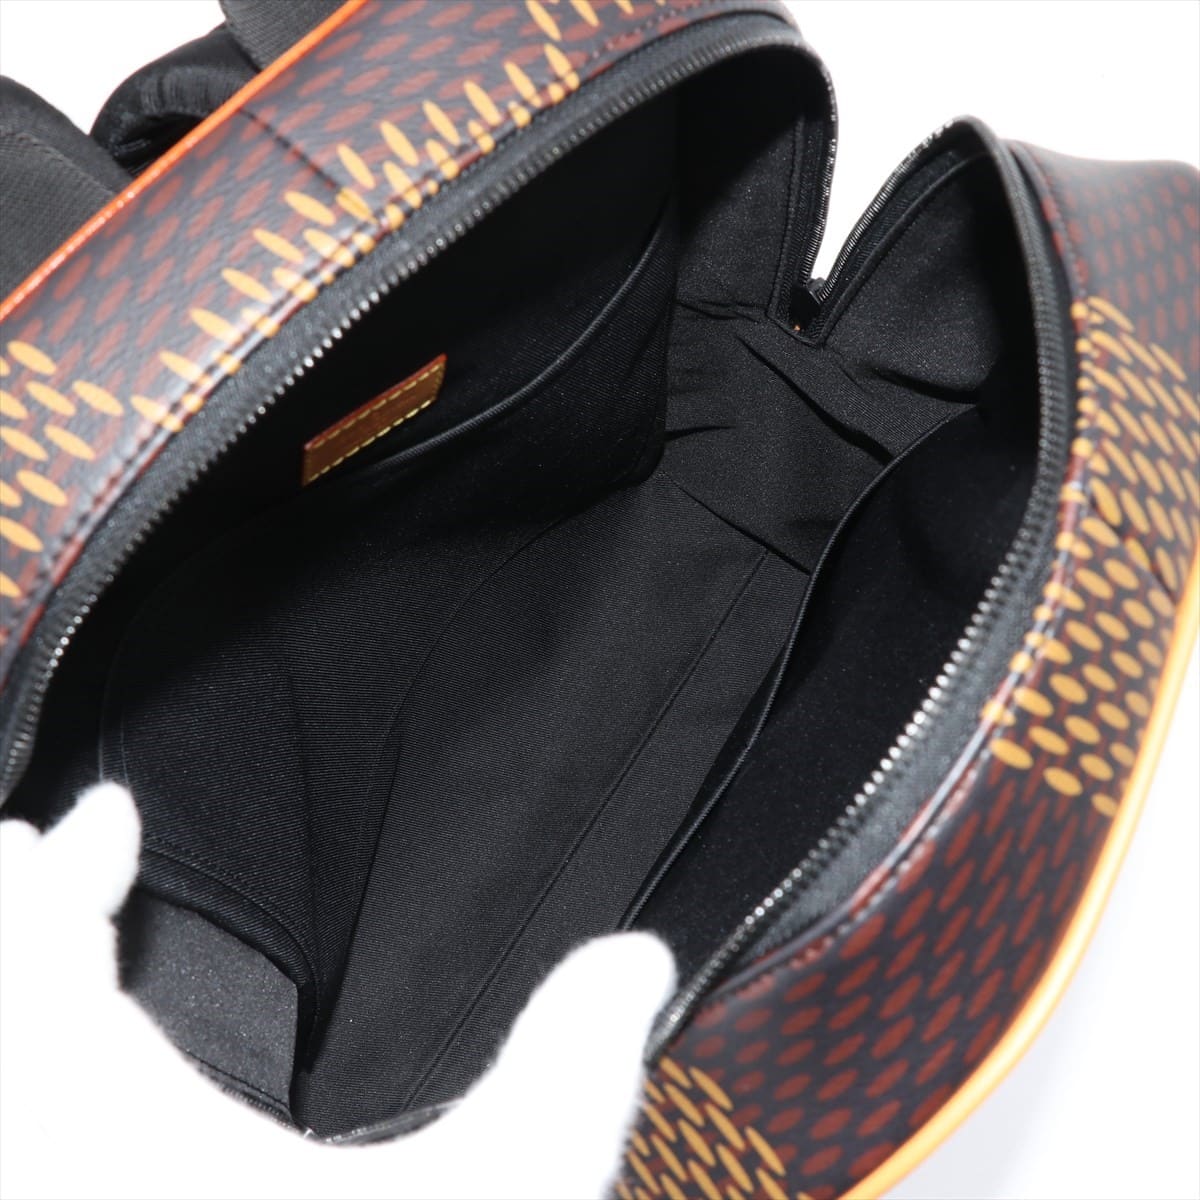 Louis Vuitton x NIGO Damier giant Campus backpack N40380 Brown CA2280